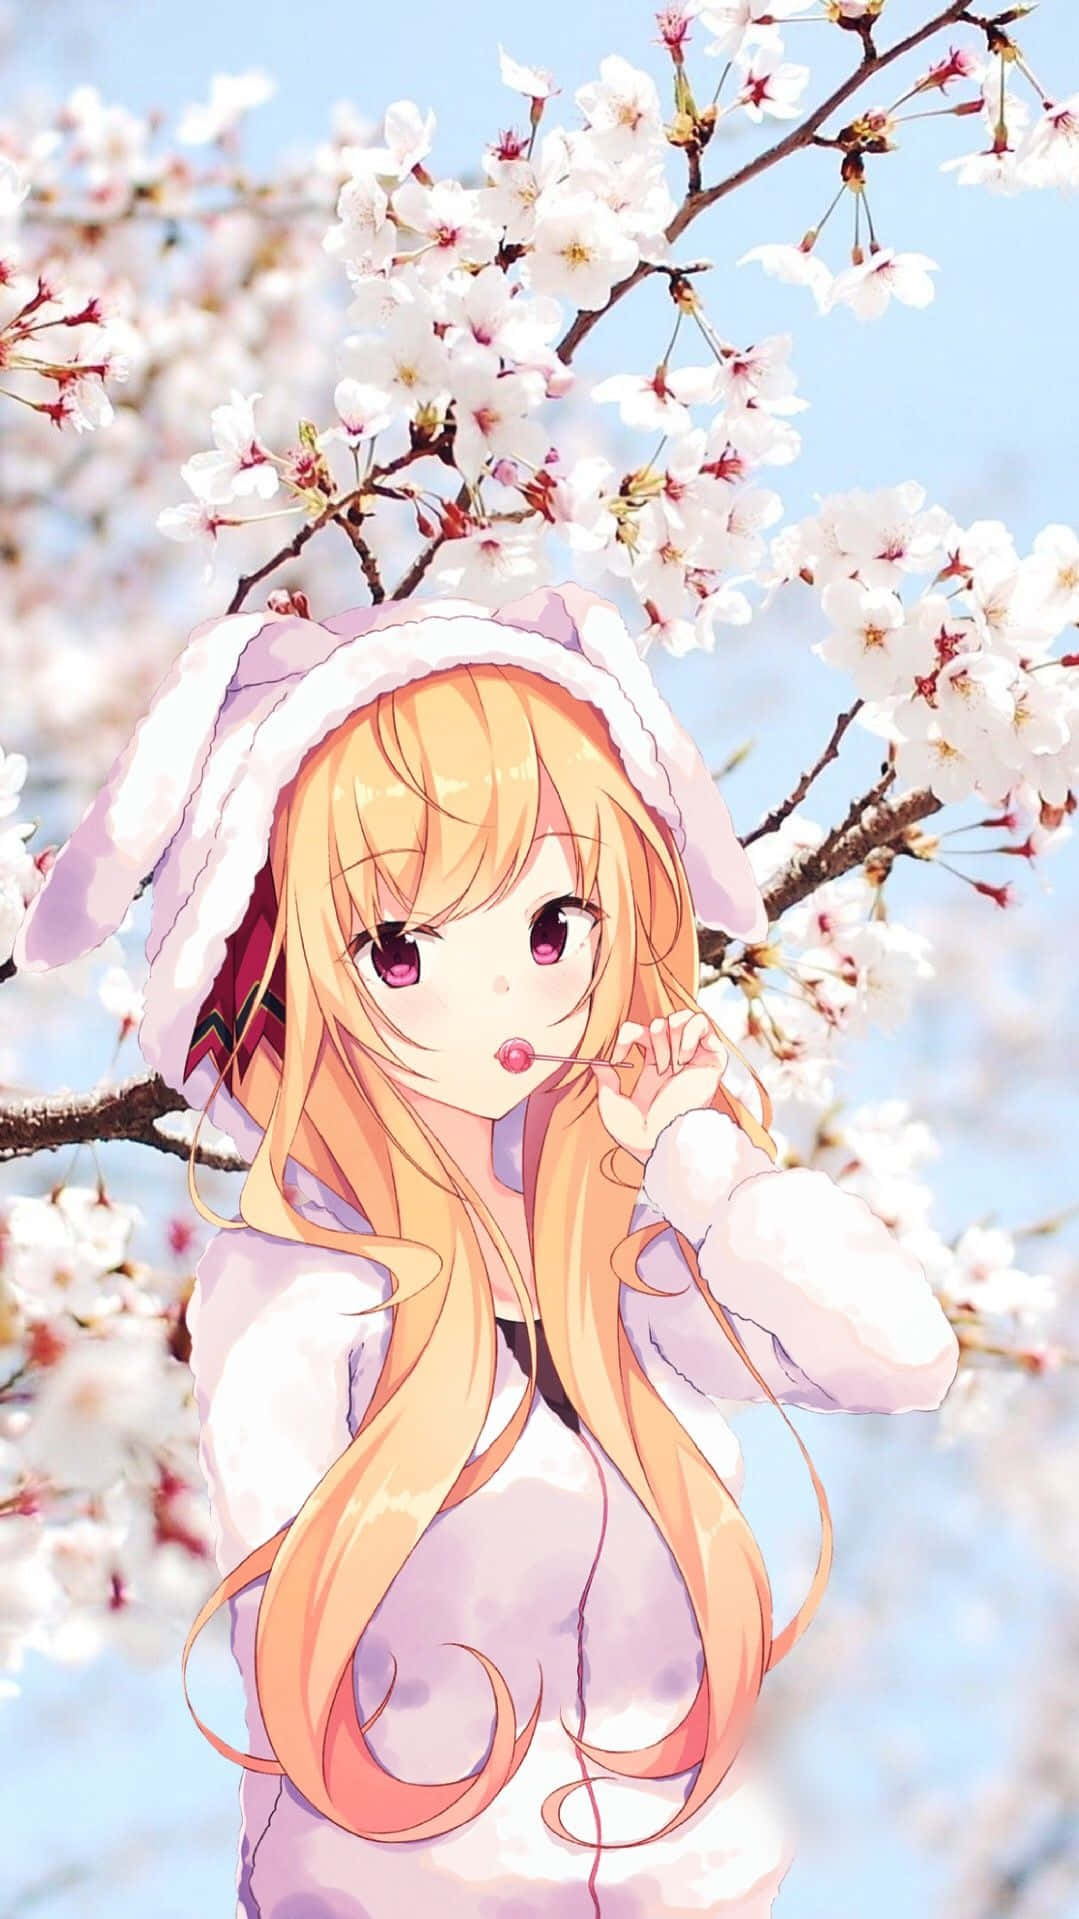 Wallpaper  anime girls Sakura blossom 1920x1080  garett  1948941  HD  Wallpapers  WallHere